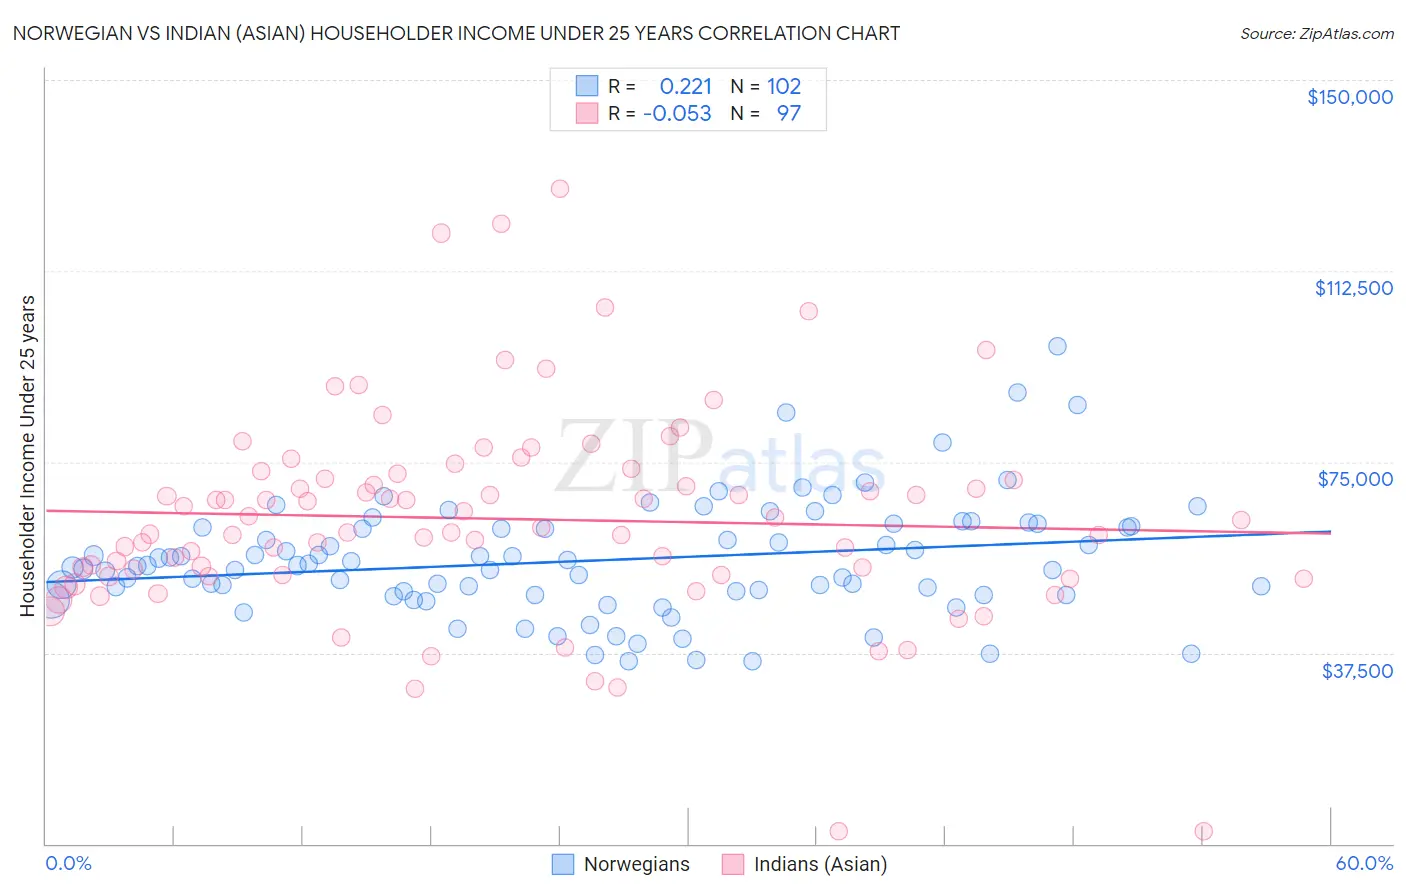 Norwegian vs Indian (Asian) Householder Income Under 25 years